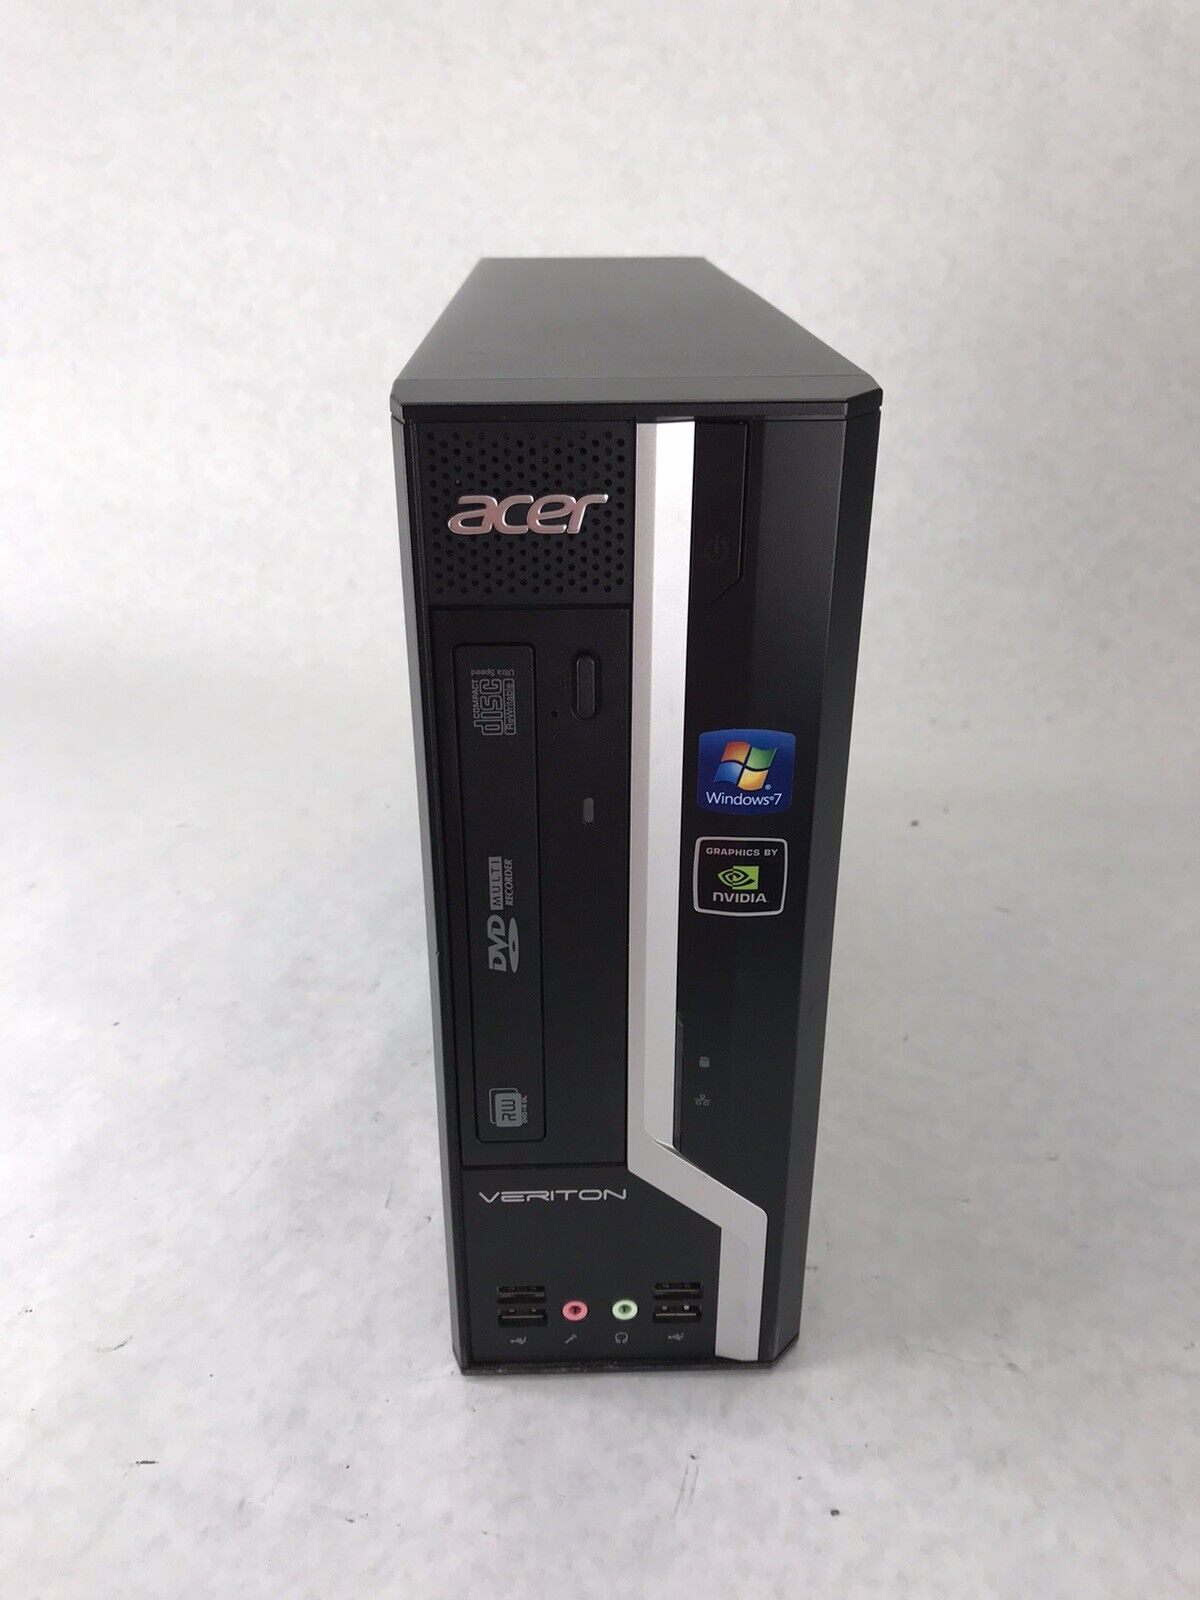 Acer Veriton X2110 SFF AMD Athlon II X2 260 CPU @ 3.20GHZ 4GB RAM No HDD No OS